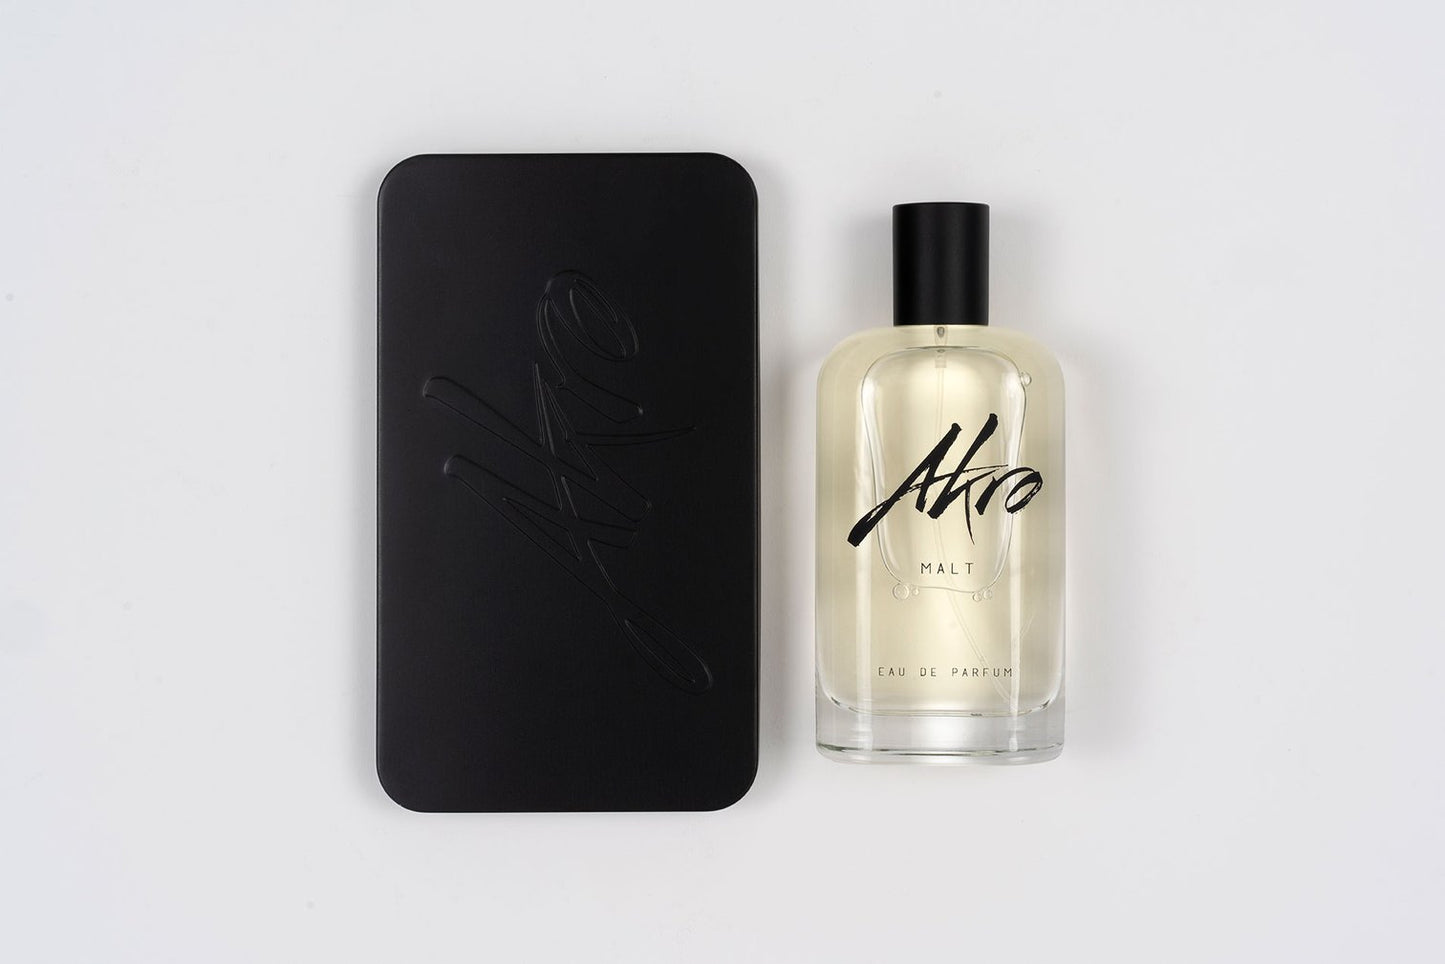 Akro - MALT Eau de Parfum 100ML